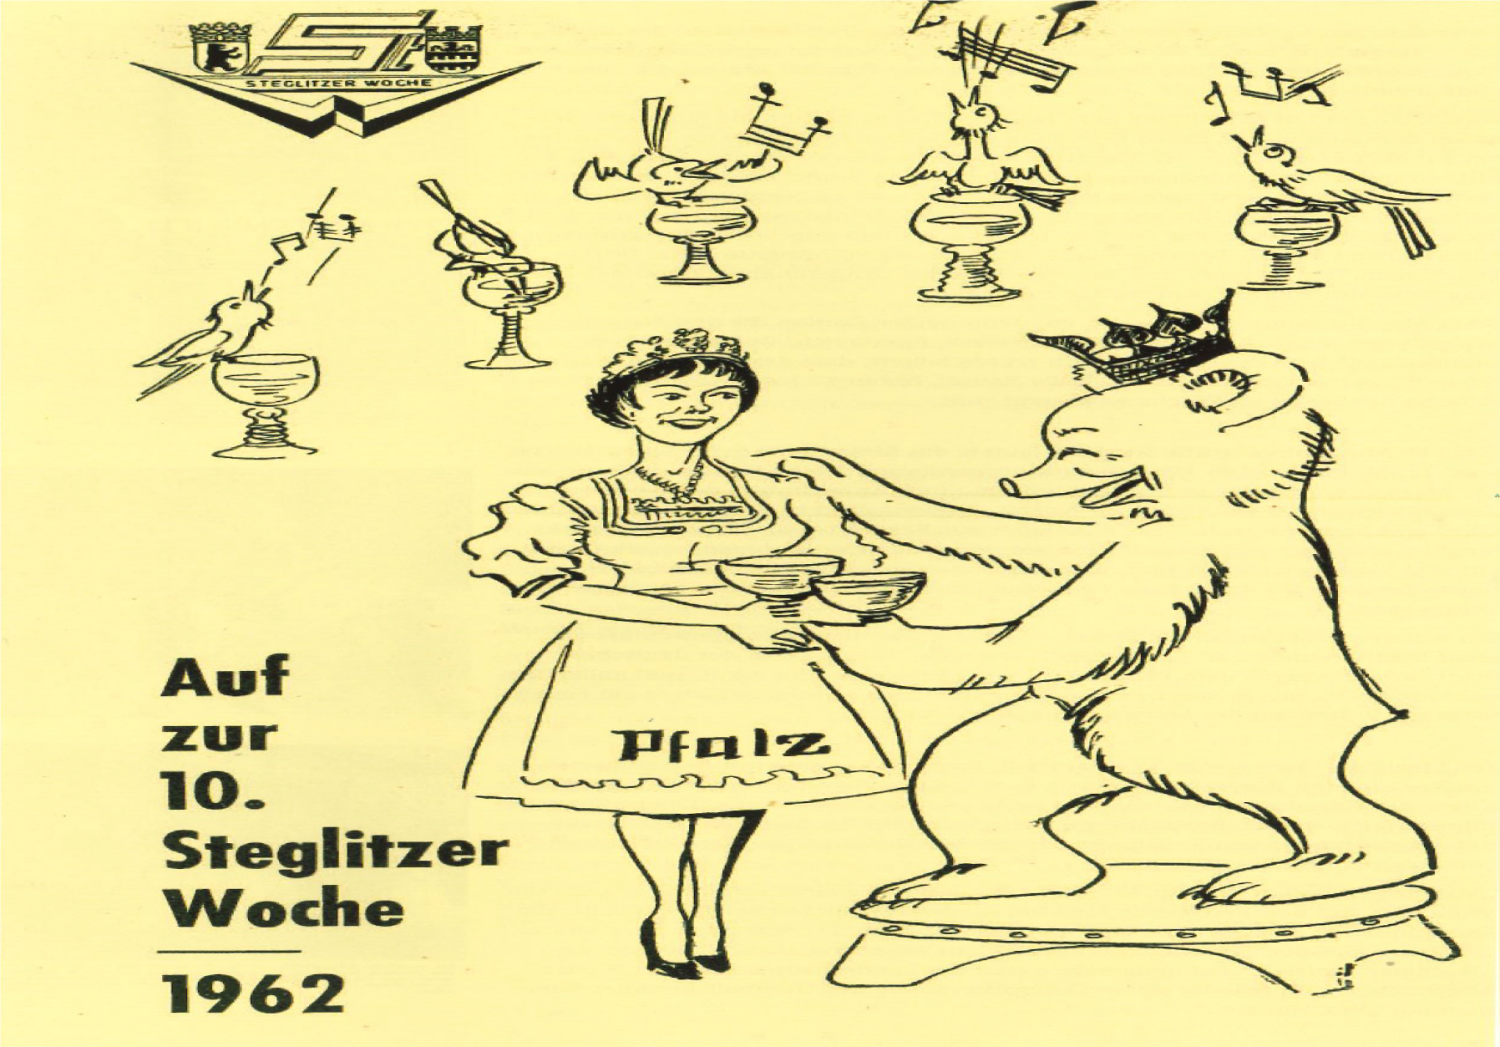 Festplakat Steglitzer Woche 1962 